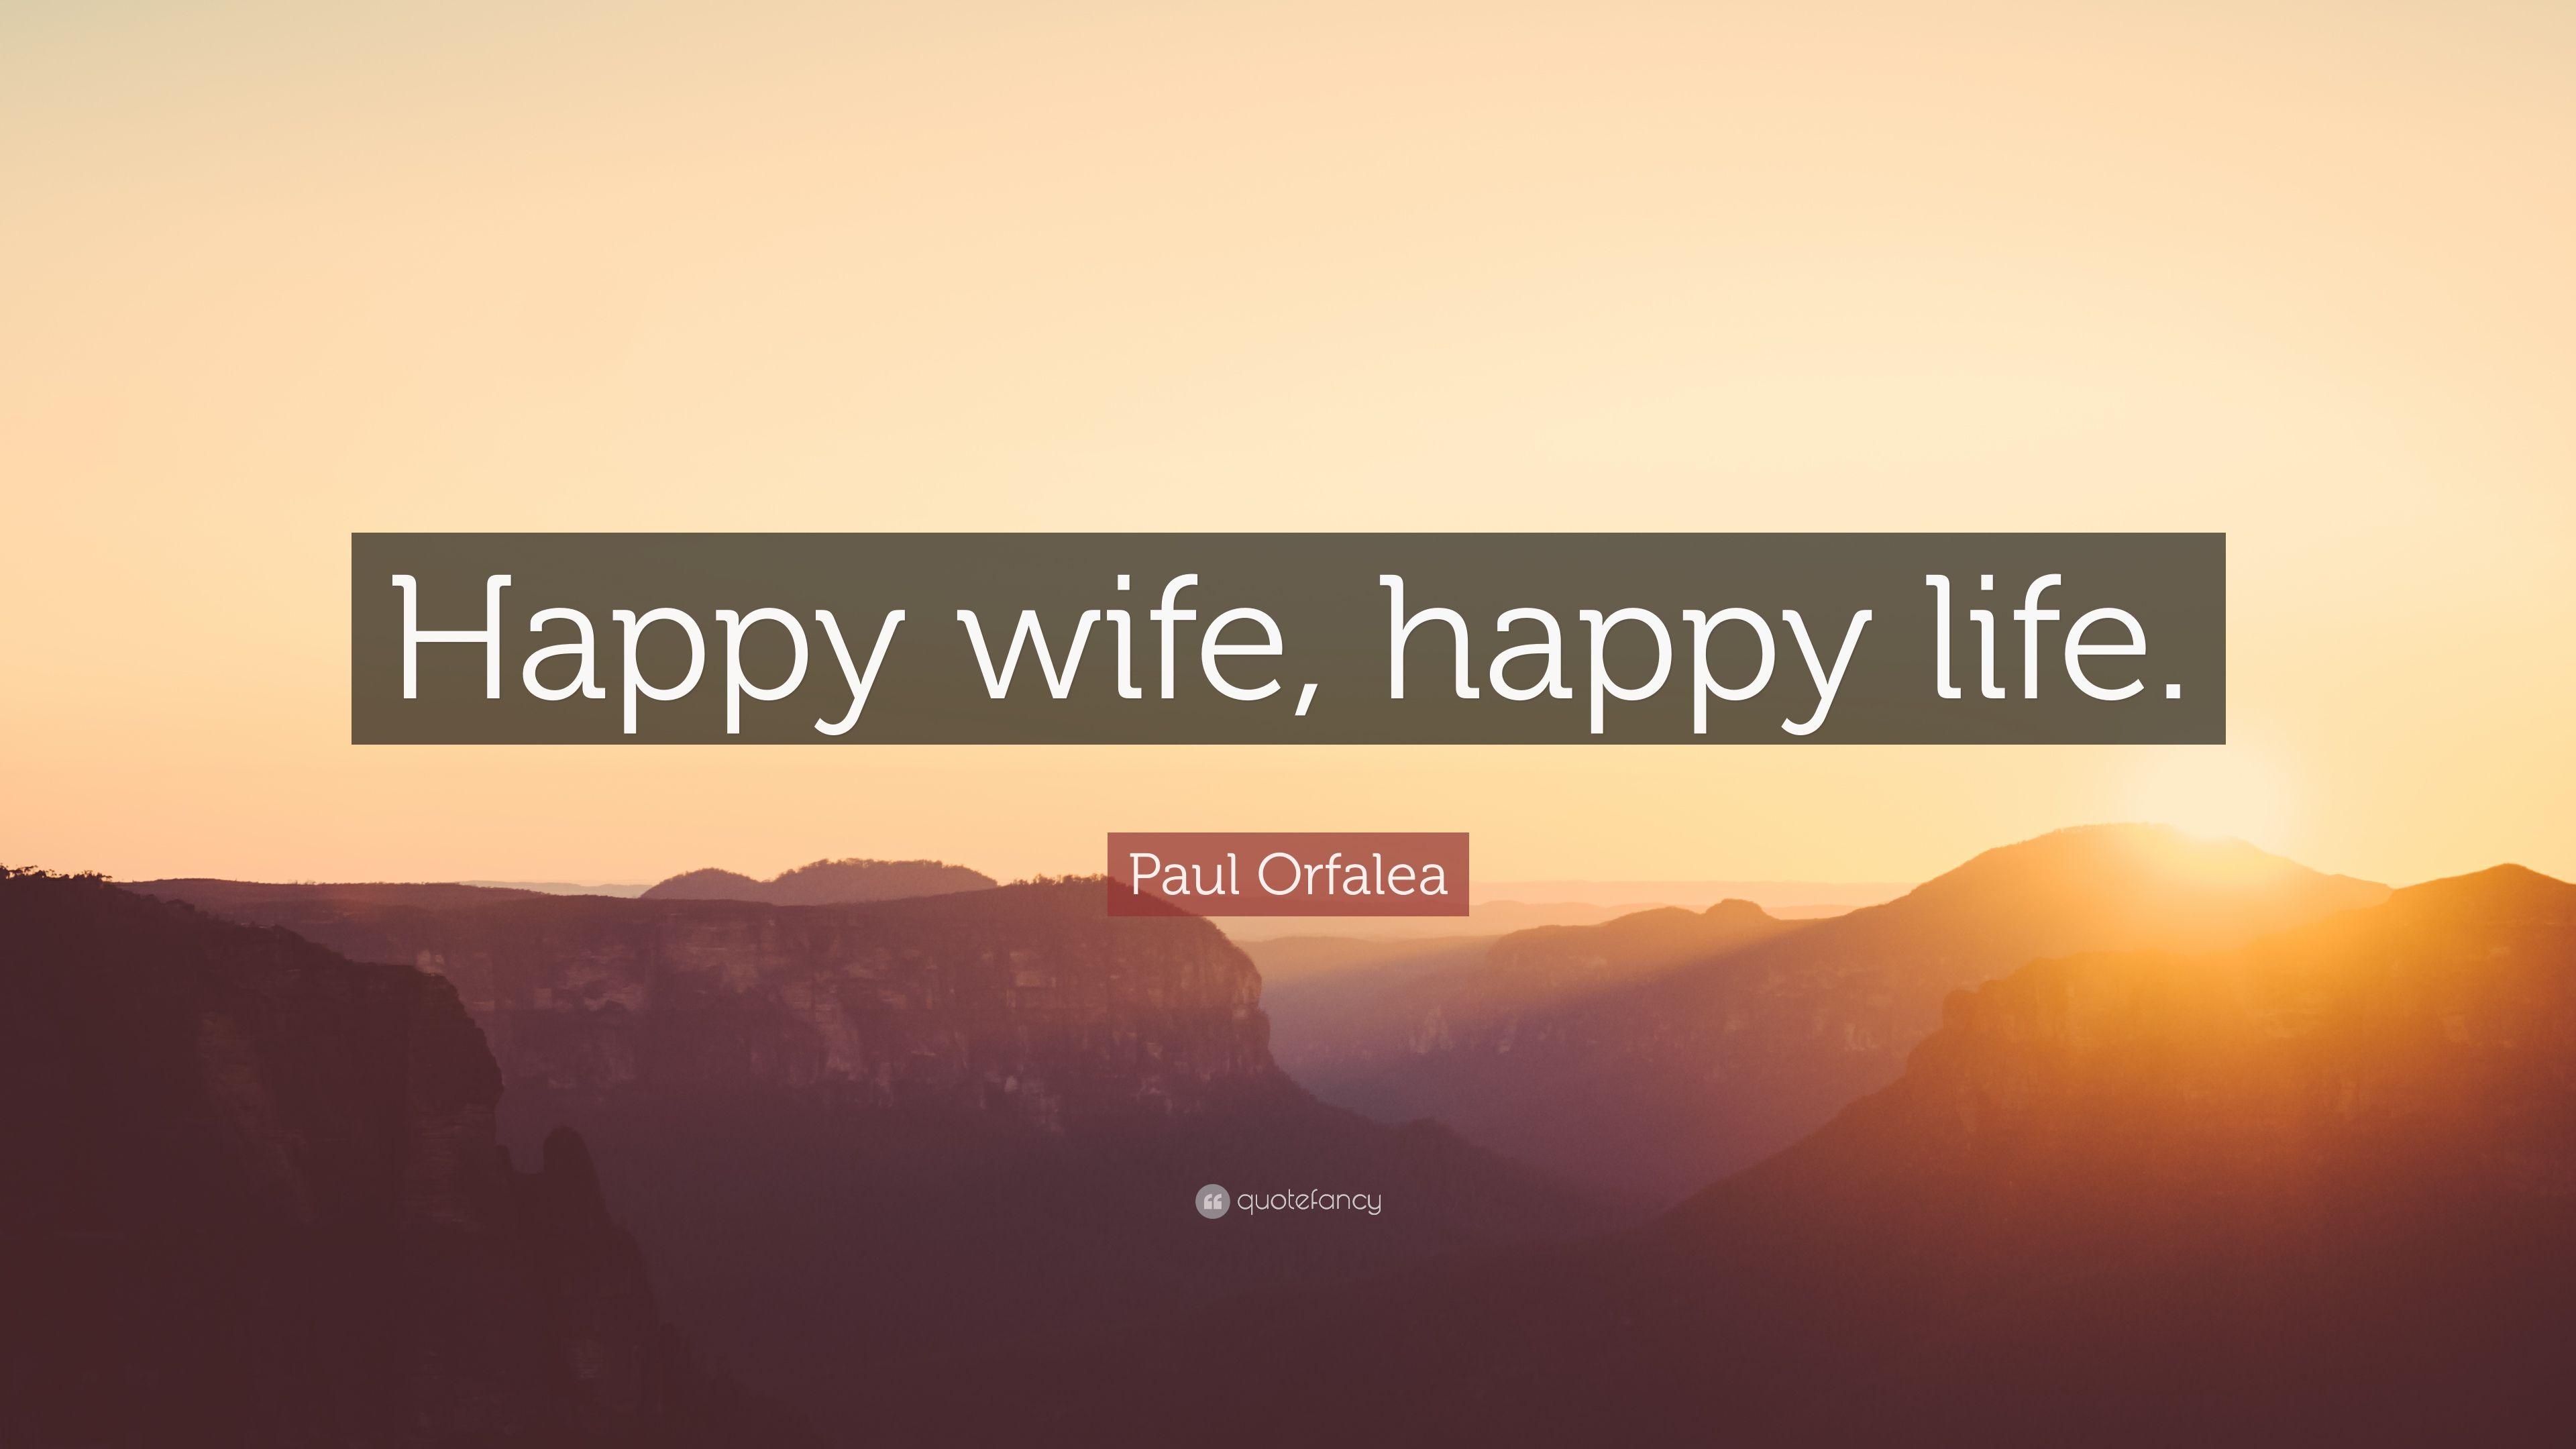 Paul Orfalea Quote: “Happy wife, happy life.” 12 wallpaper